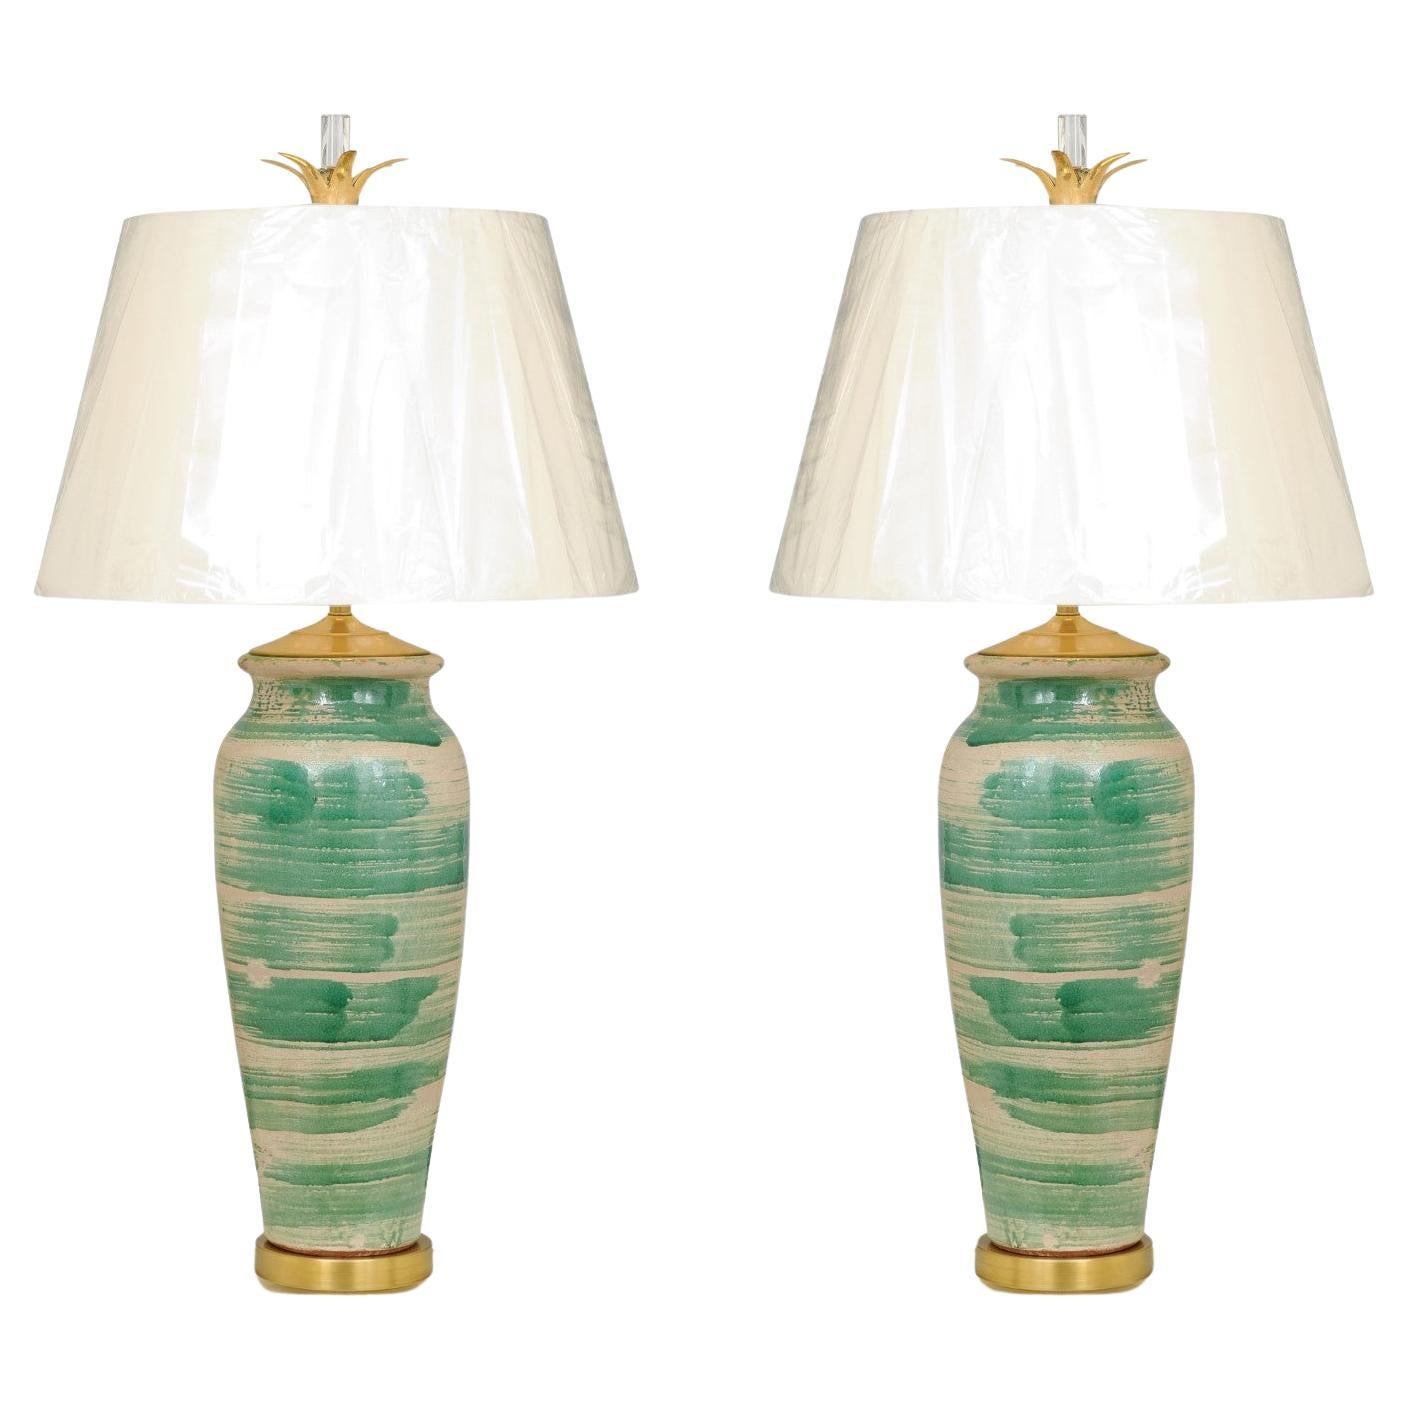 Spectacular Pair of Handmade Glaze Portuguese Ceramic Vessels as Custom Lamps